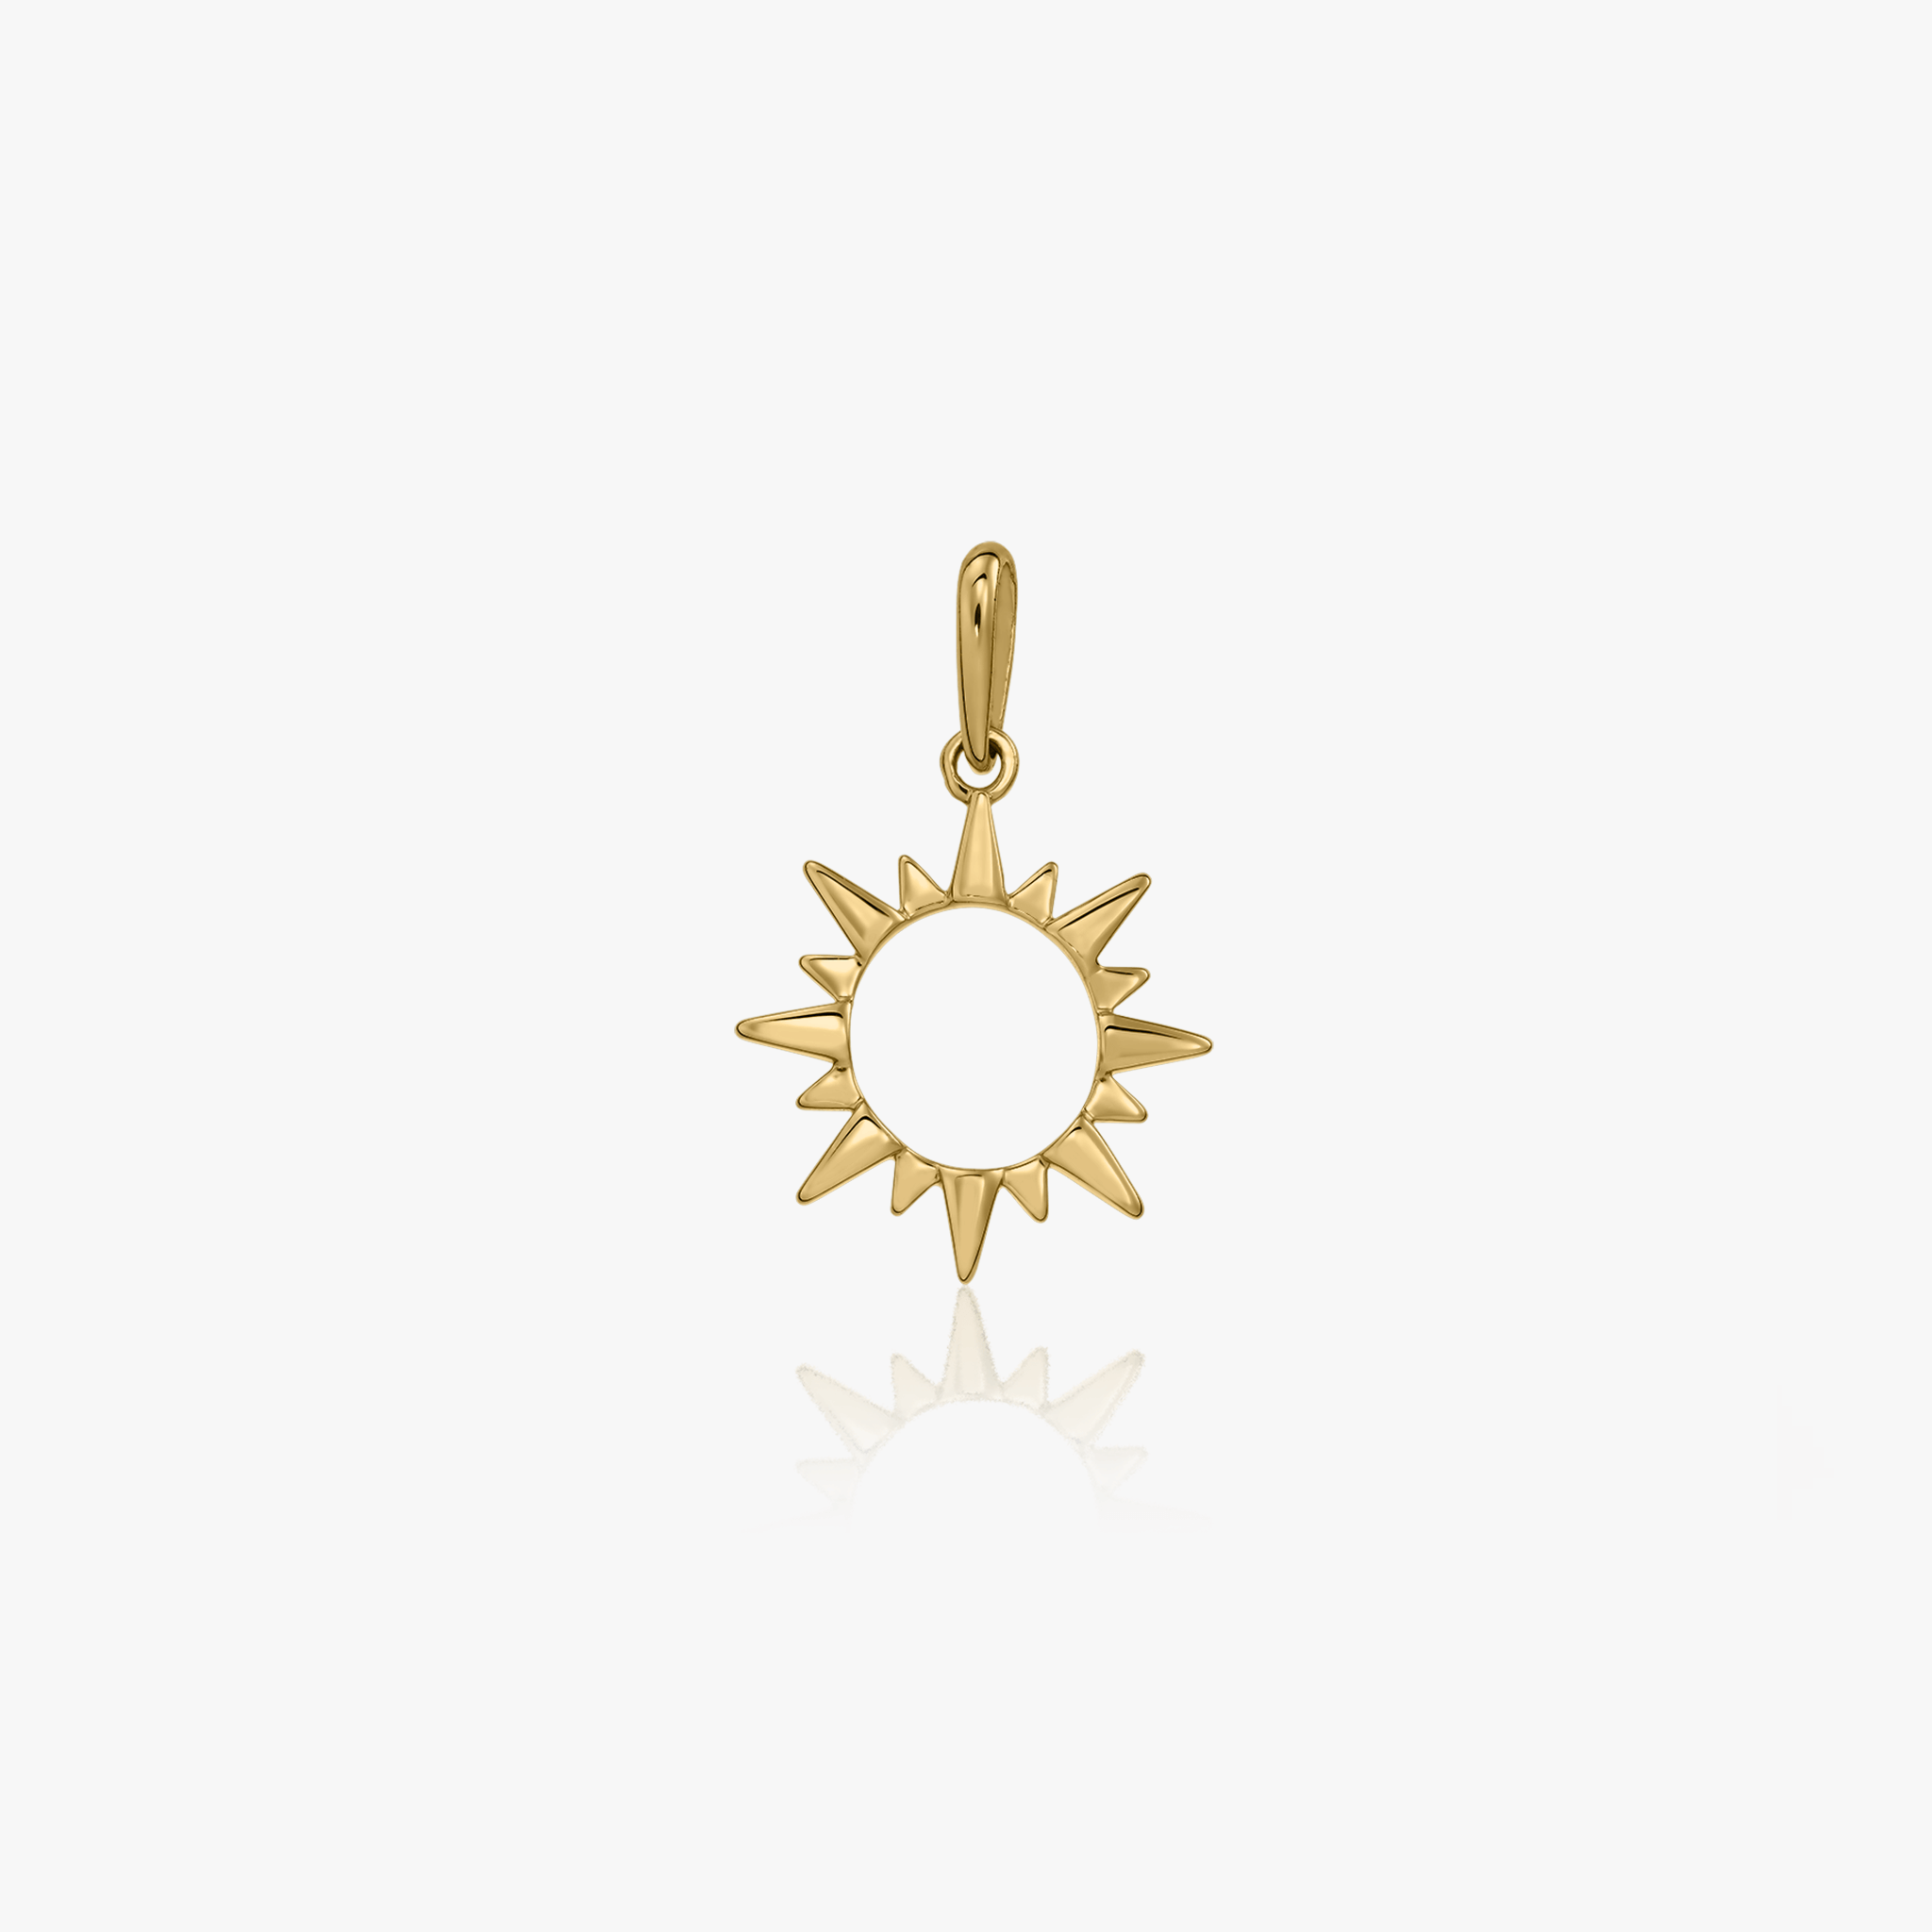 Sunshine gold pendant